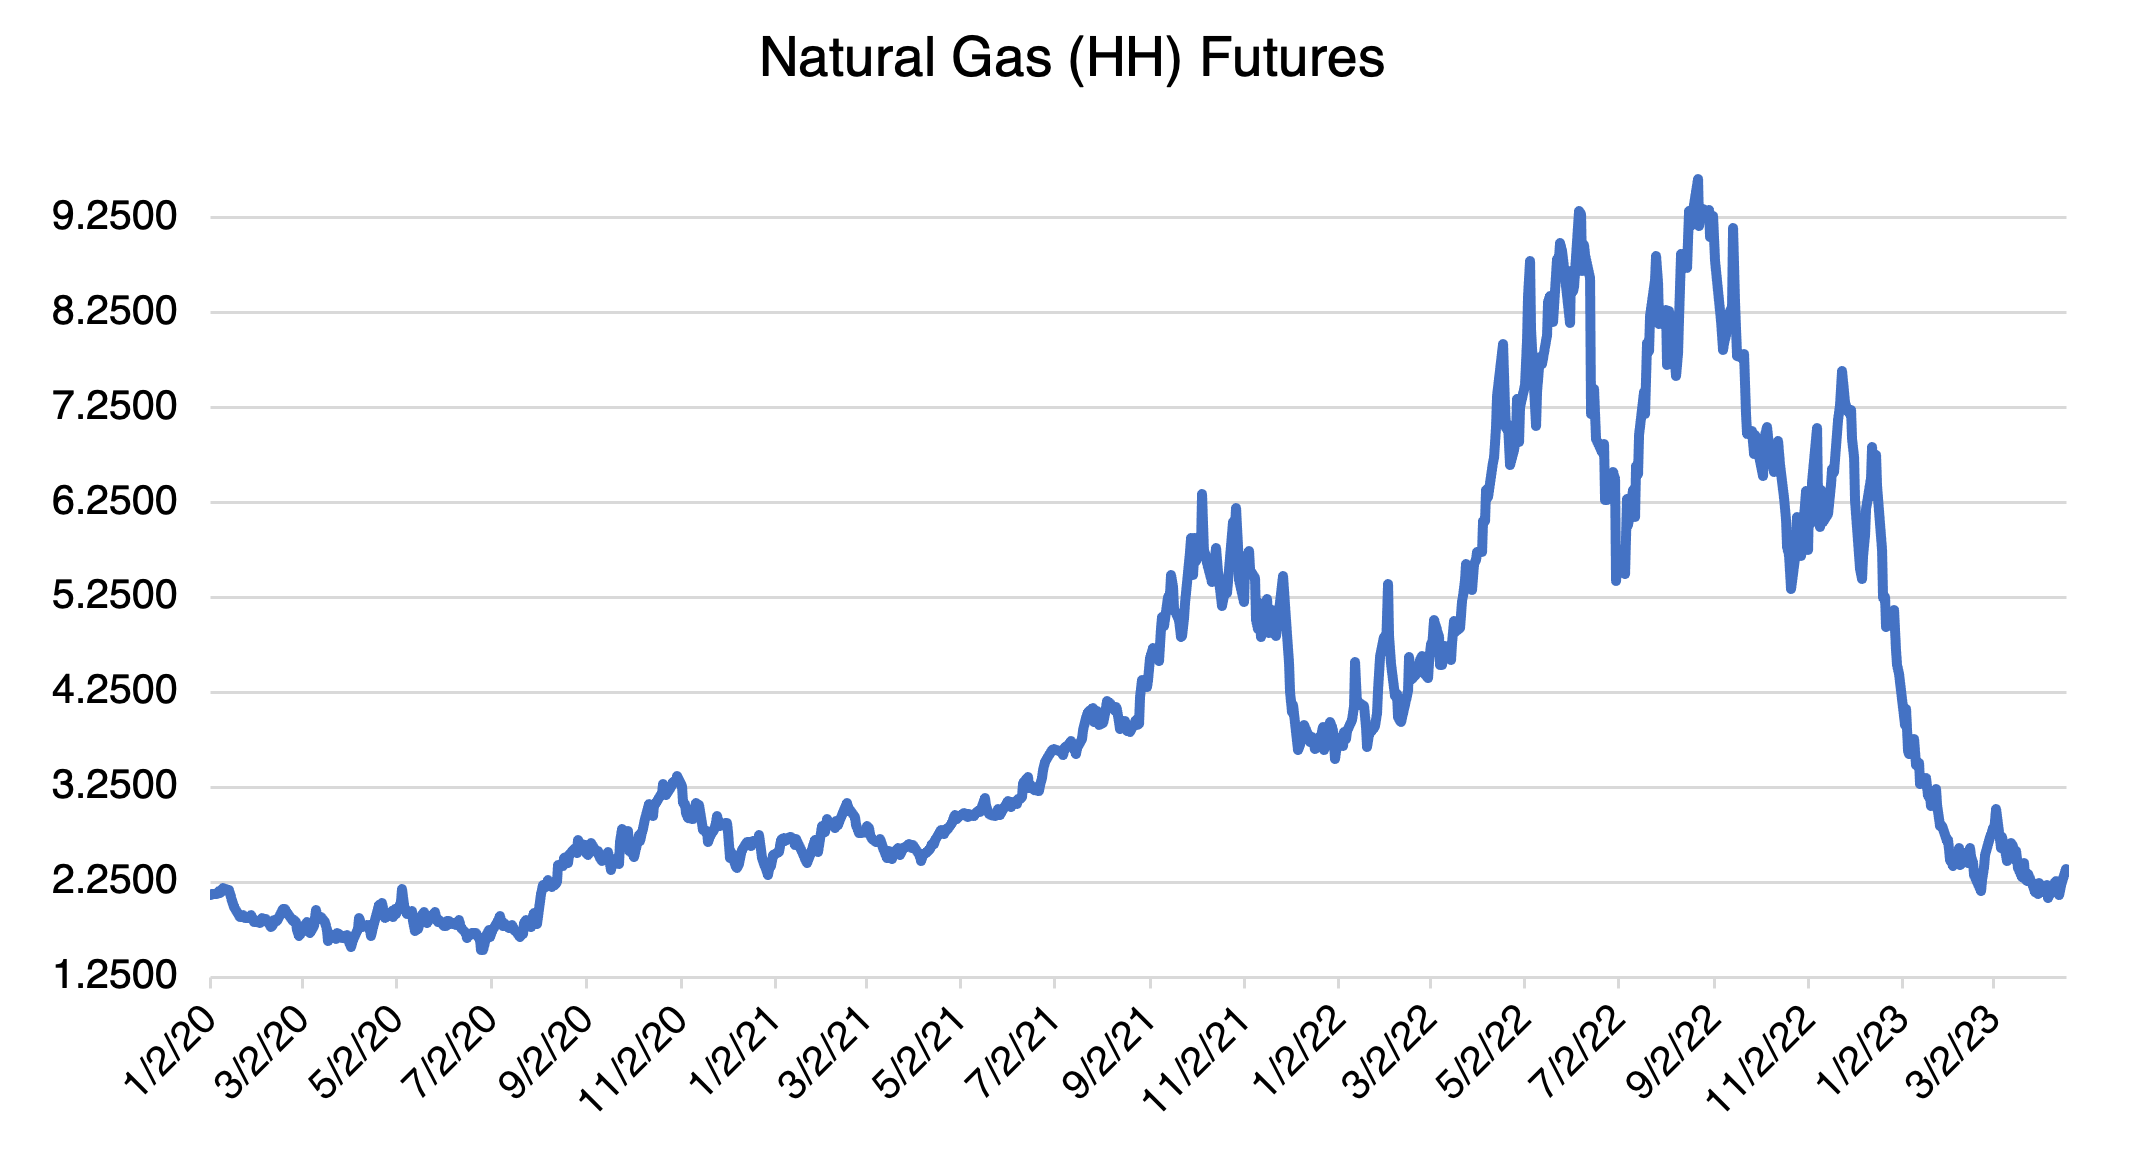 Natural Gas HH Futures